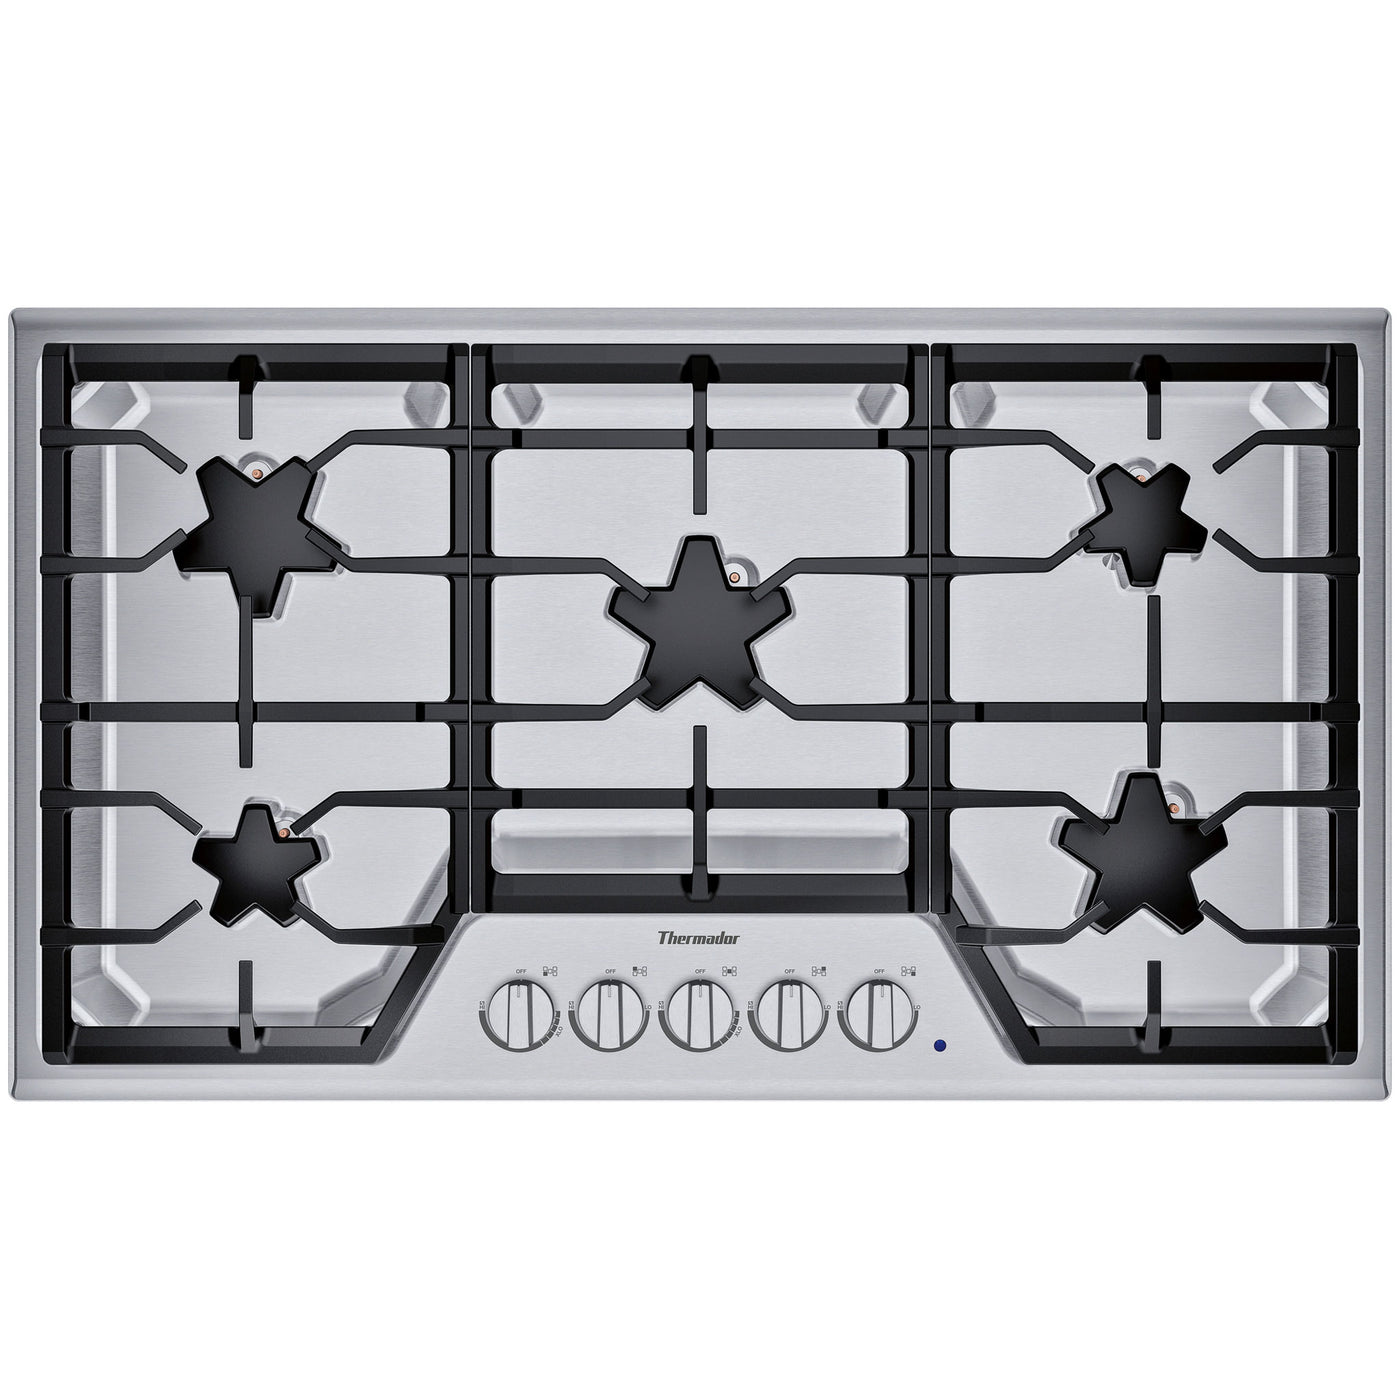 thermador-SGSX365TS-gas-cooktop